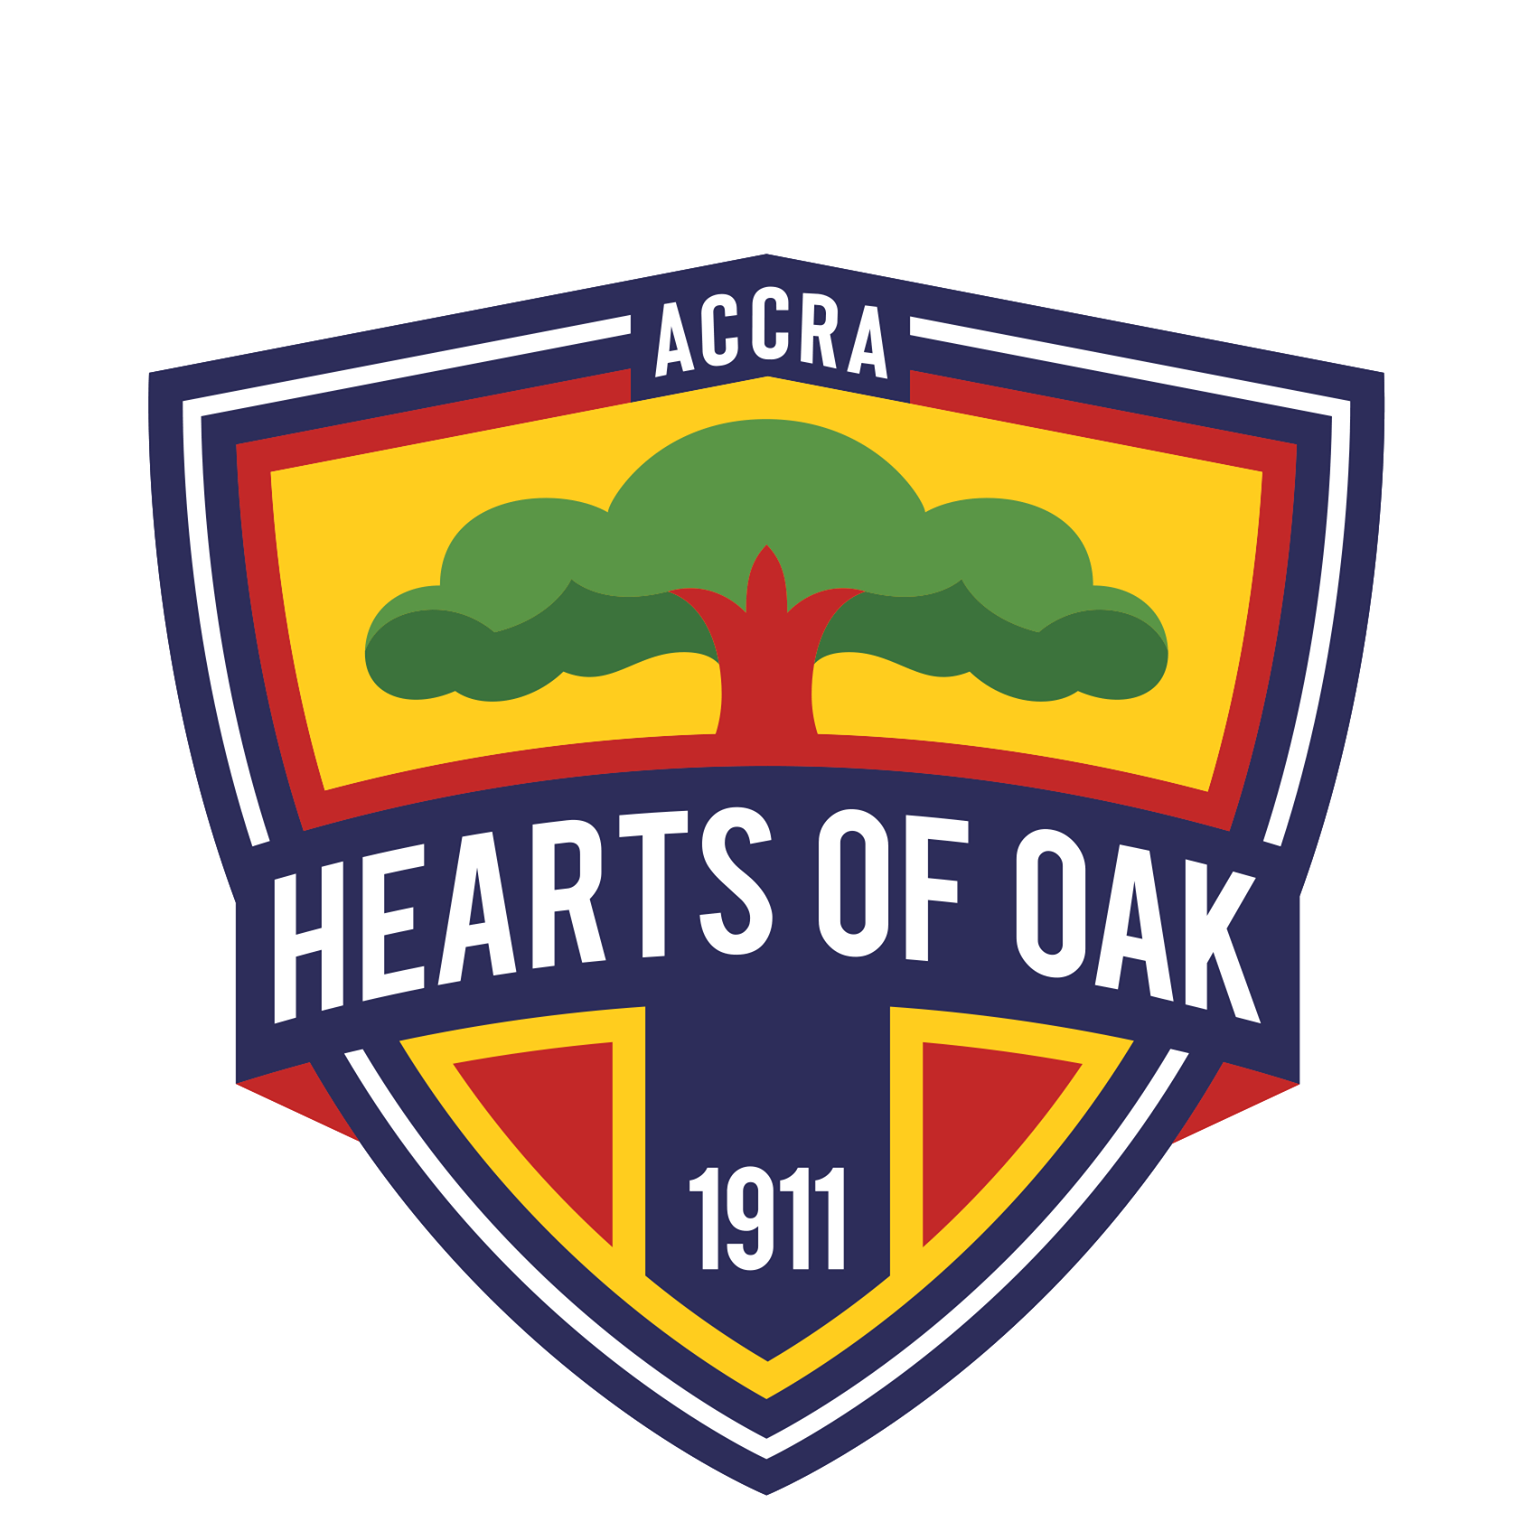 Accra Hearts of Oak S.C